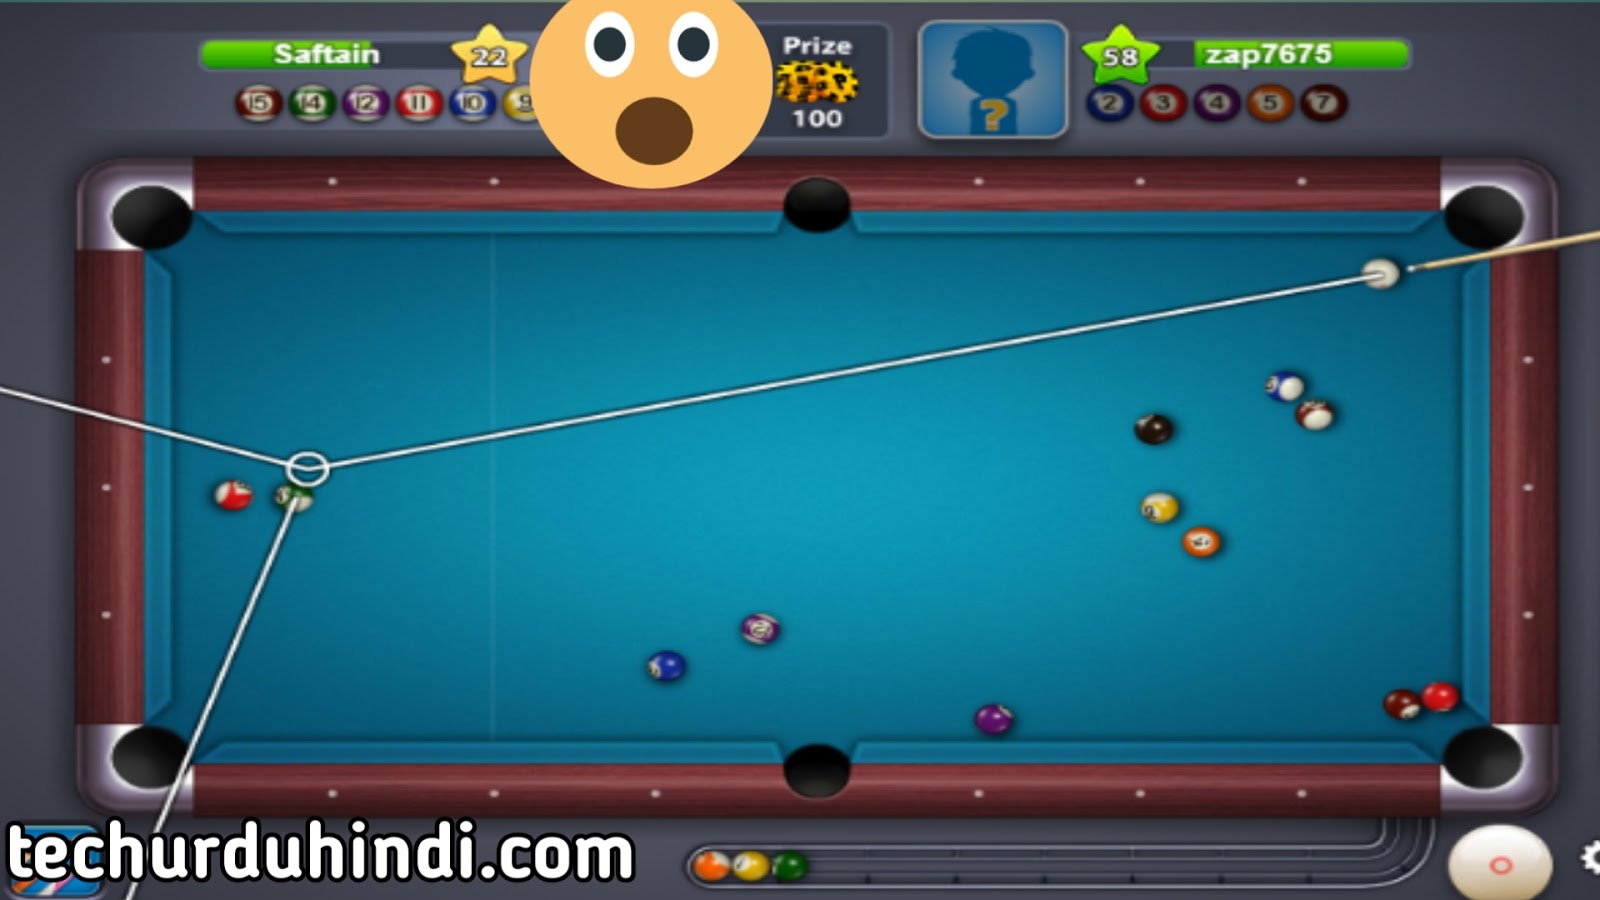 8 Ball Pool Mod APK - Tech Urdu Hindi | Tips and Tricks ... - 